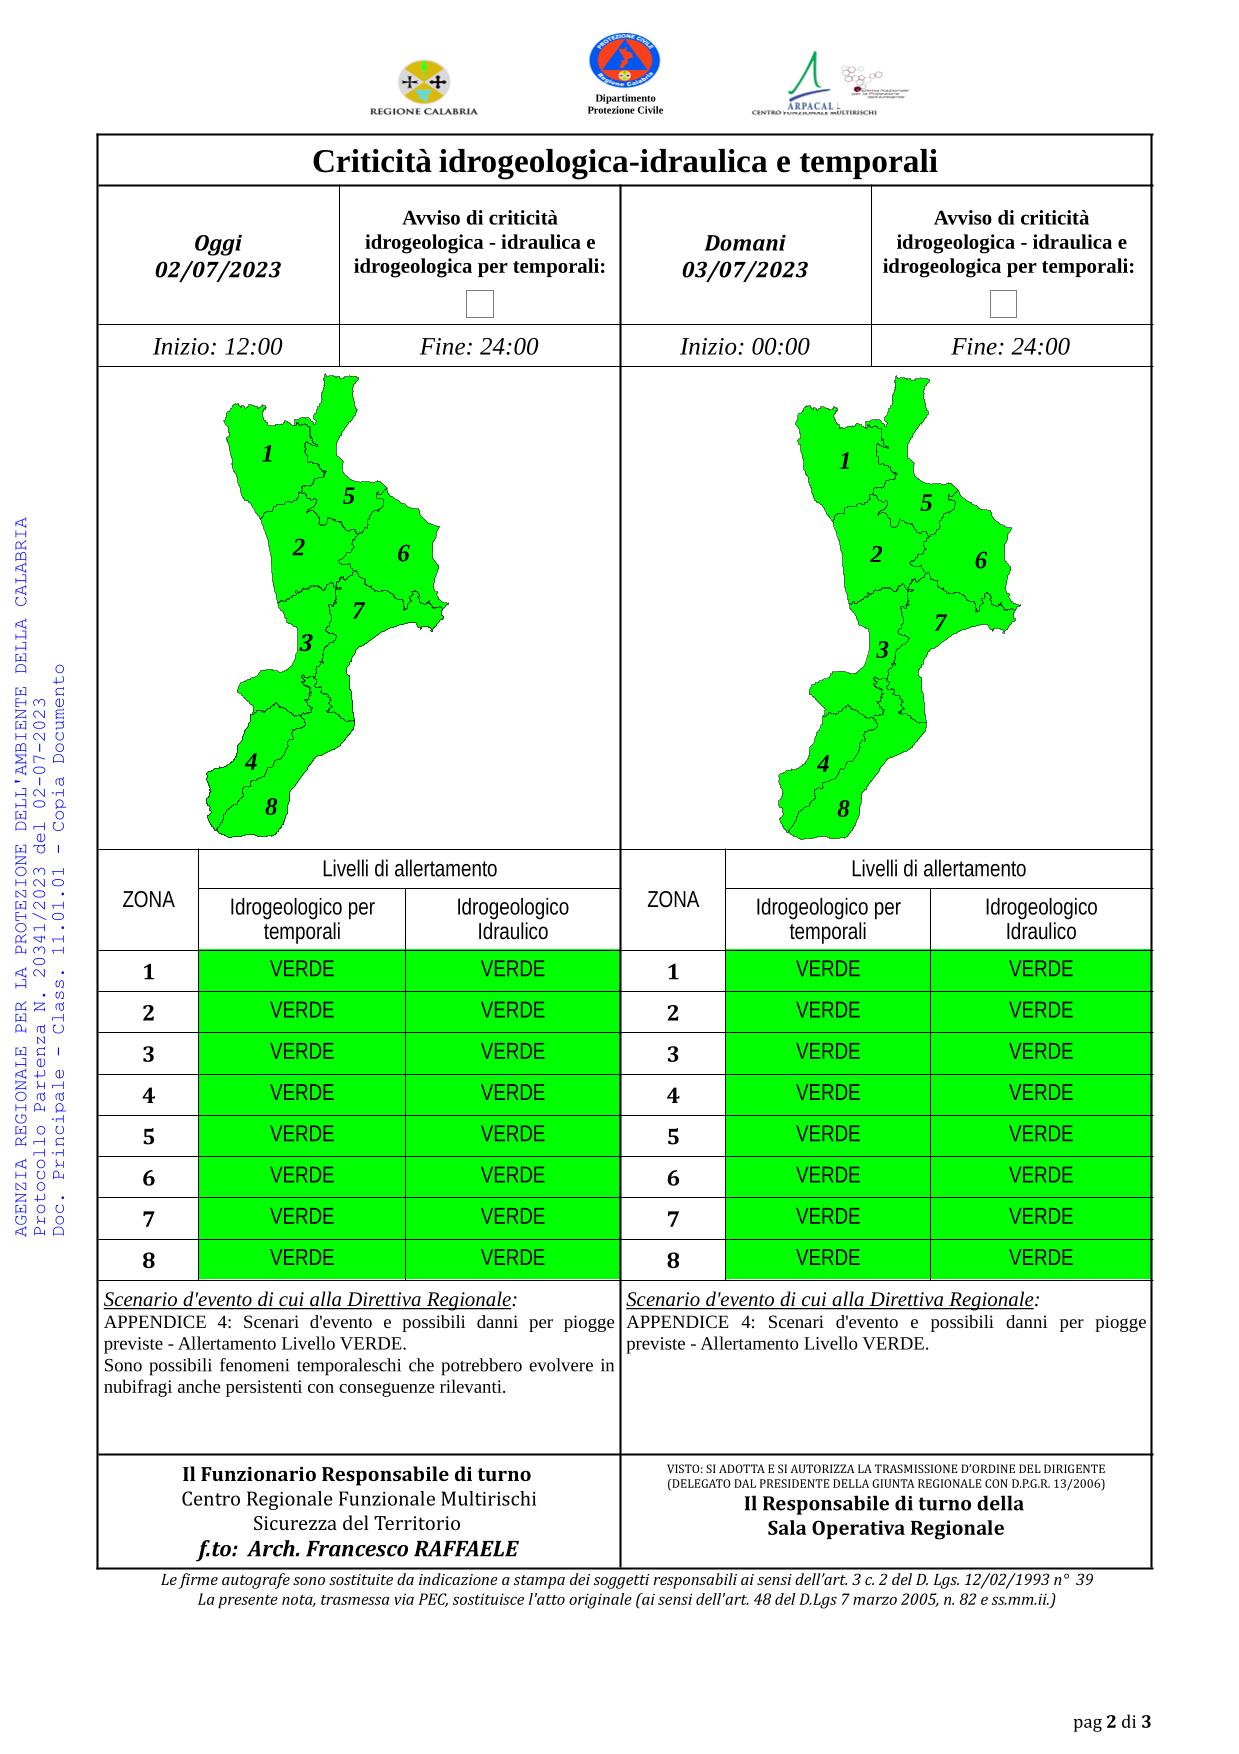 Criticità idrogeologica-idraulica e temporali in Calabria 02-07-2023